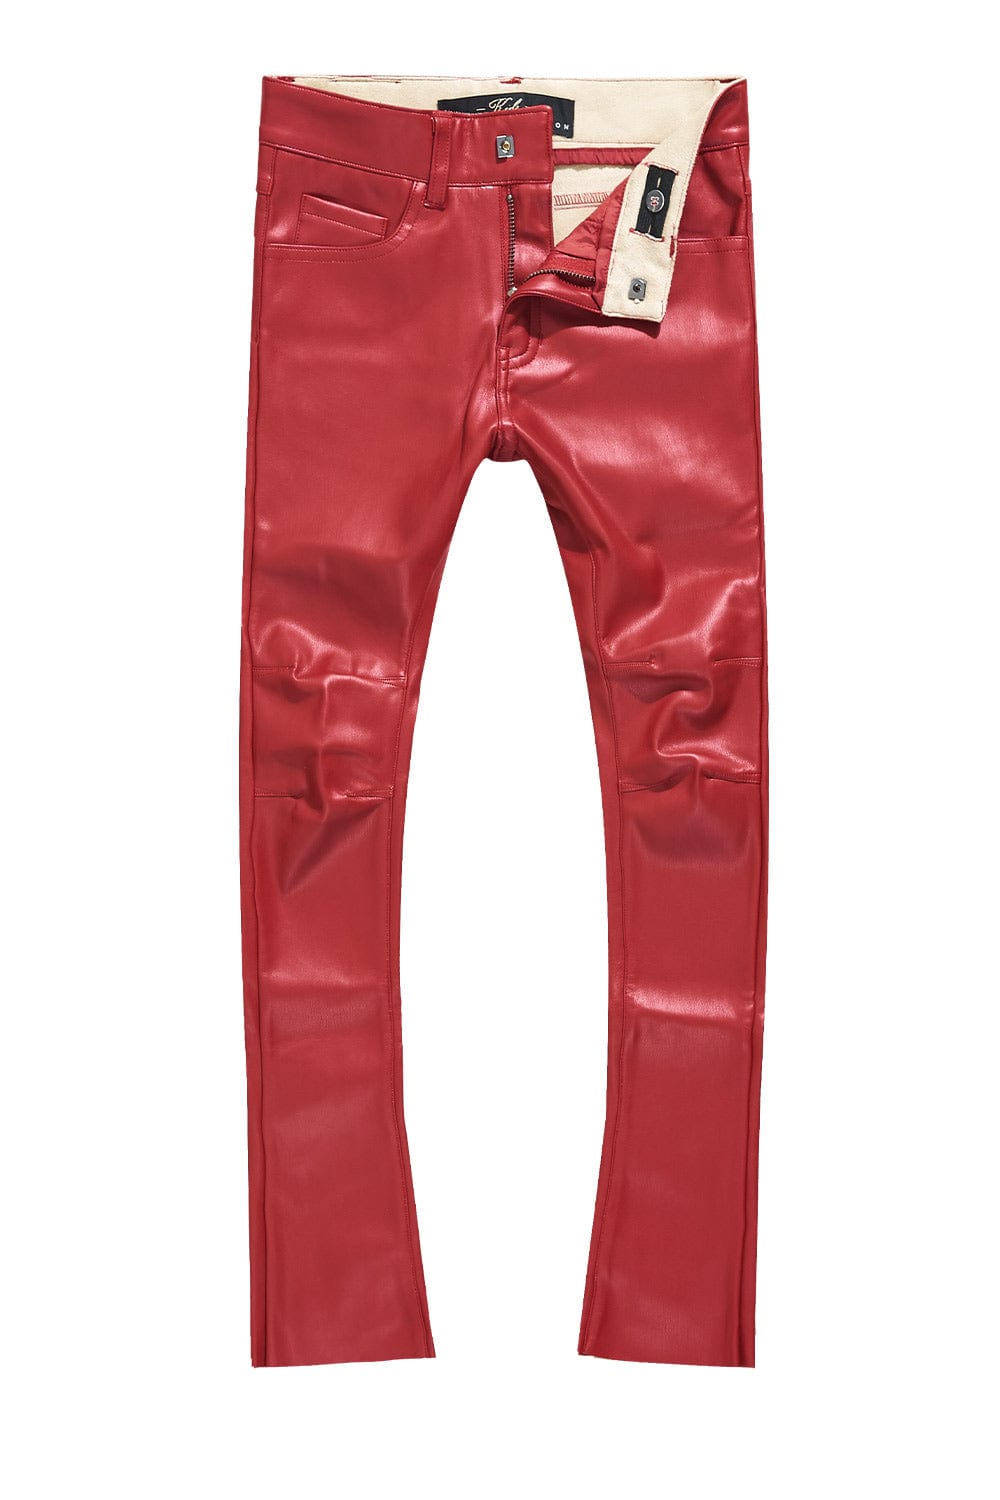 JC Kids Kids Stacked Thriller Pants (Red) 2 / Red